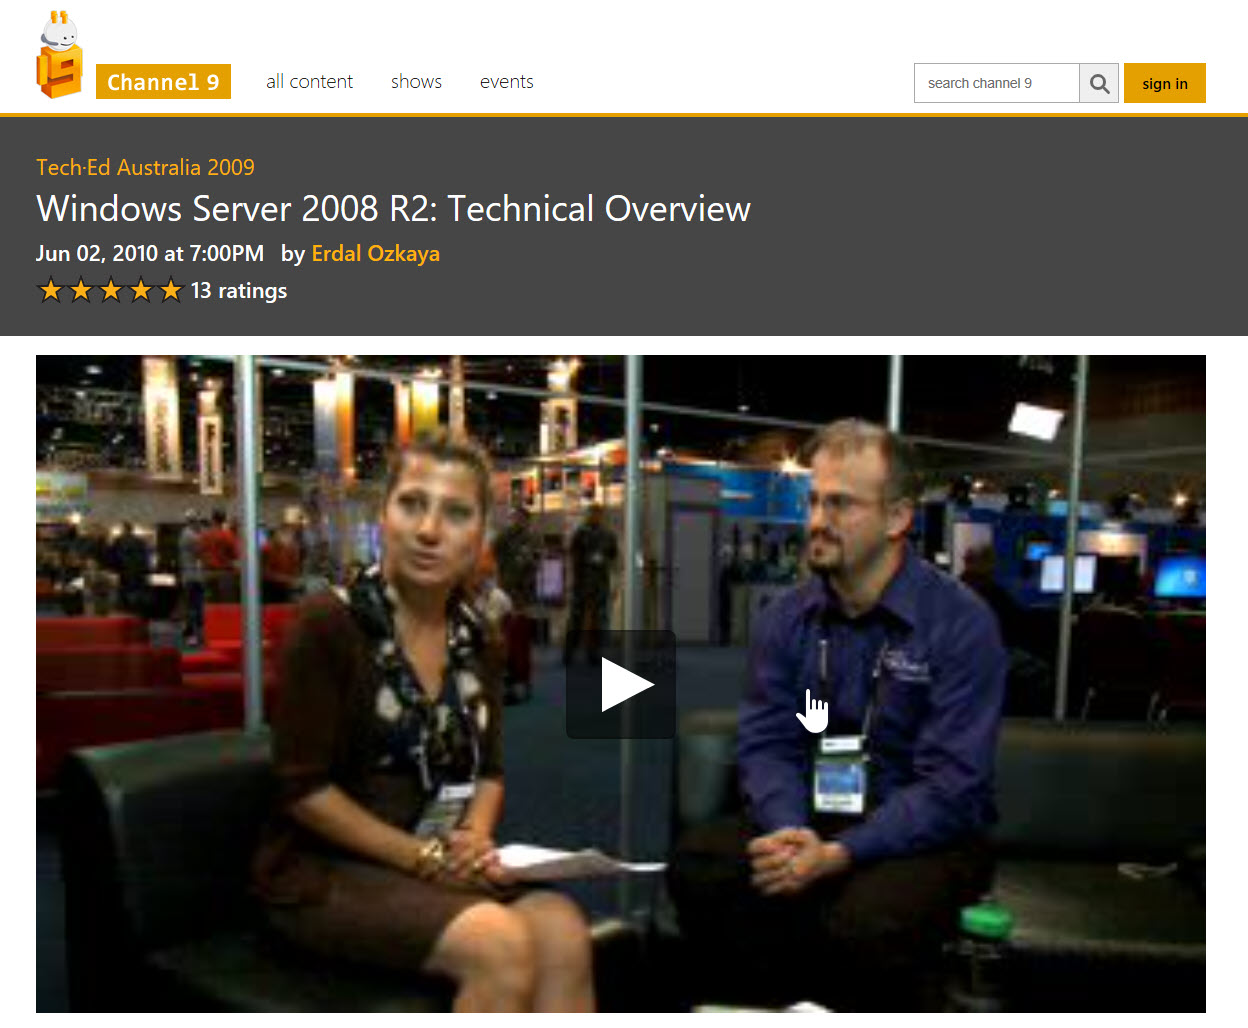 Technical Overview: Windows Server by Erdal Ozkaya